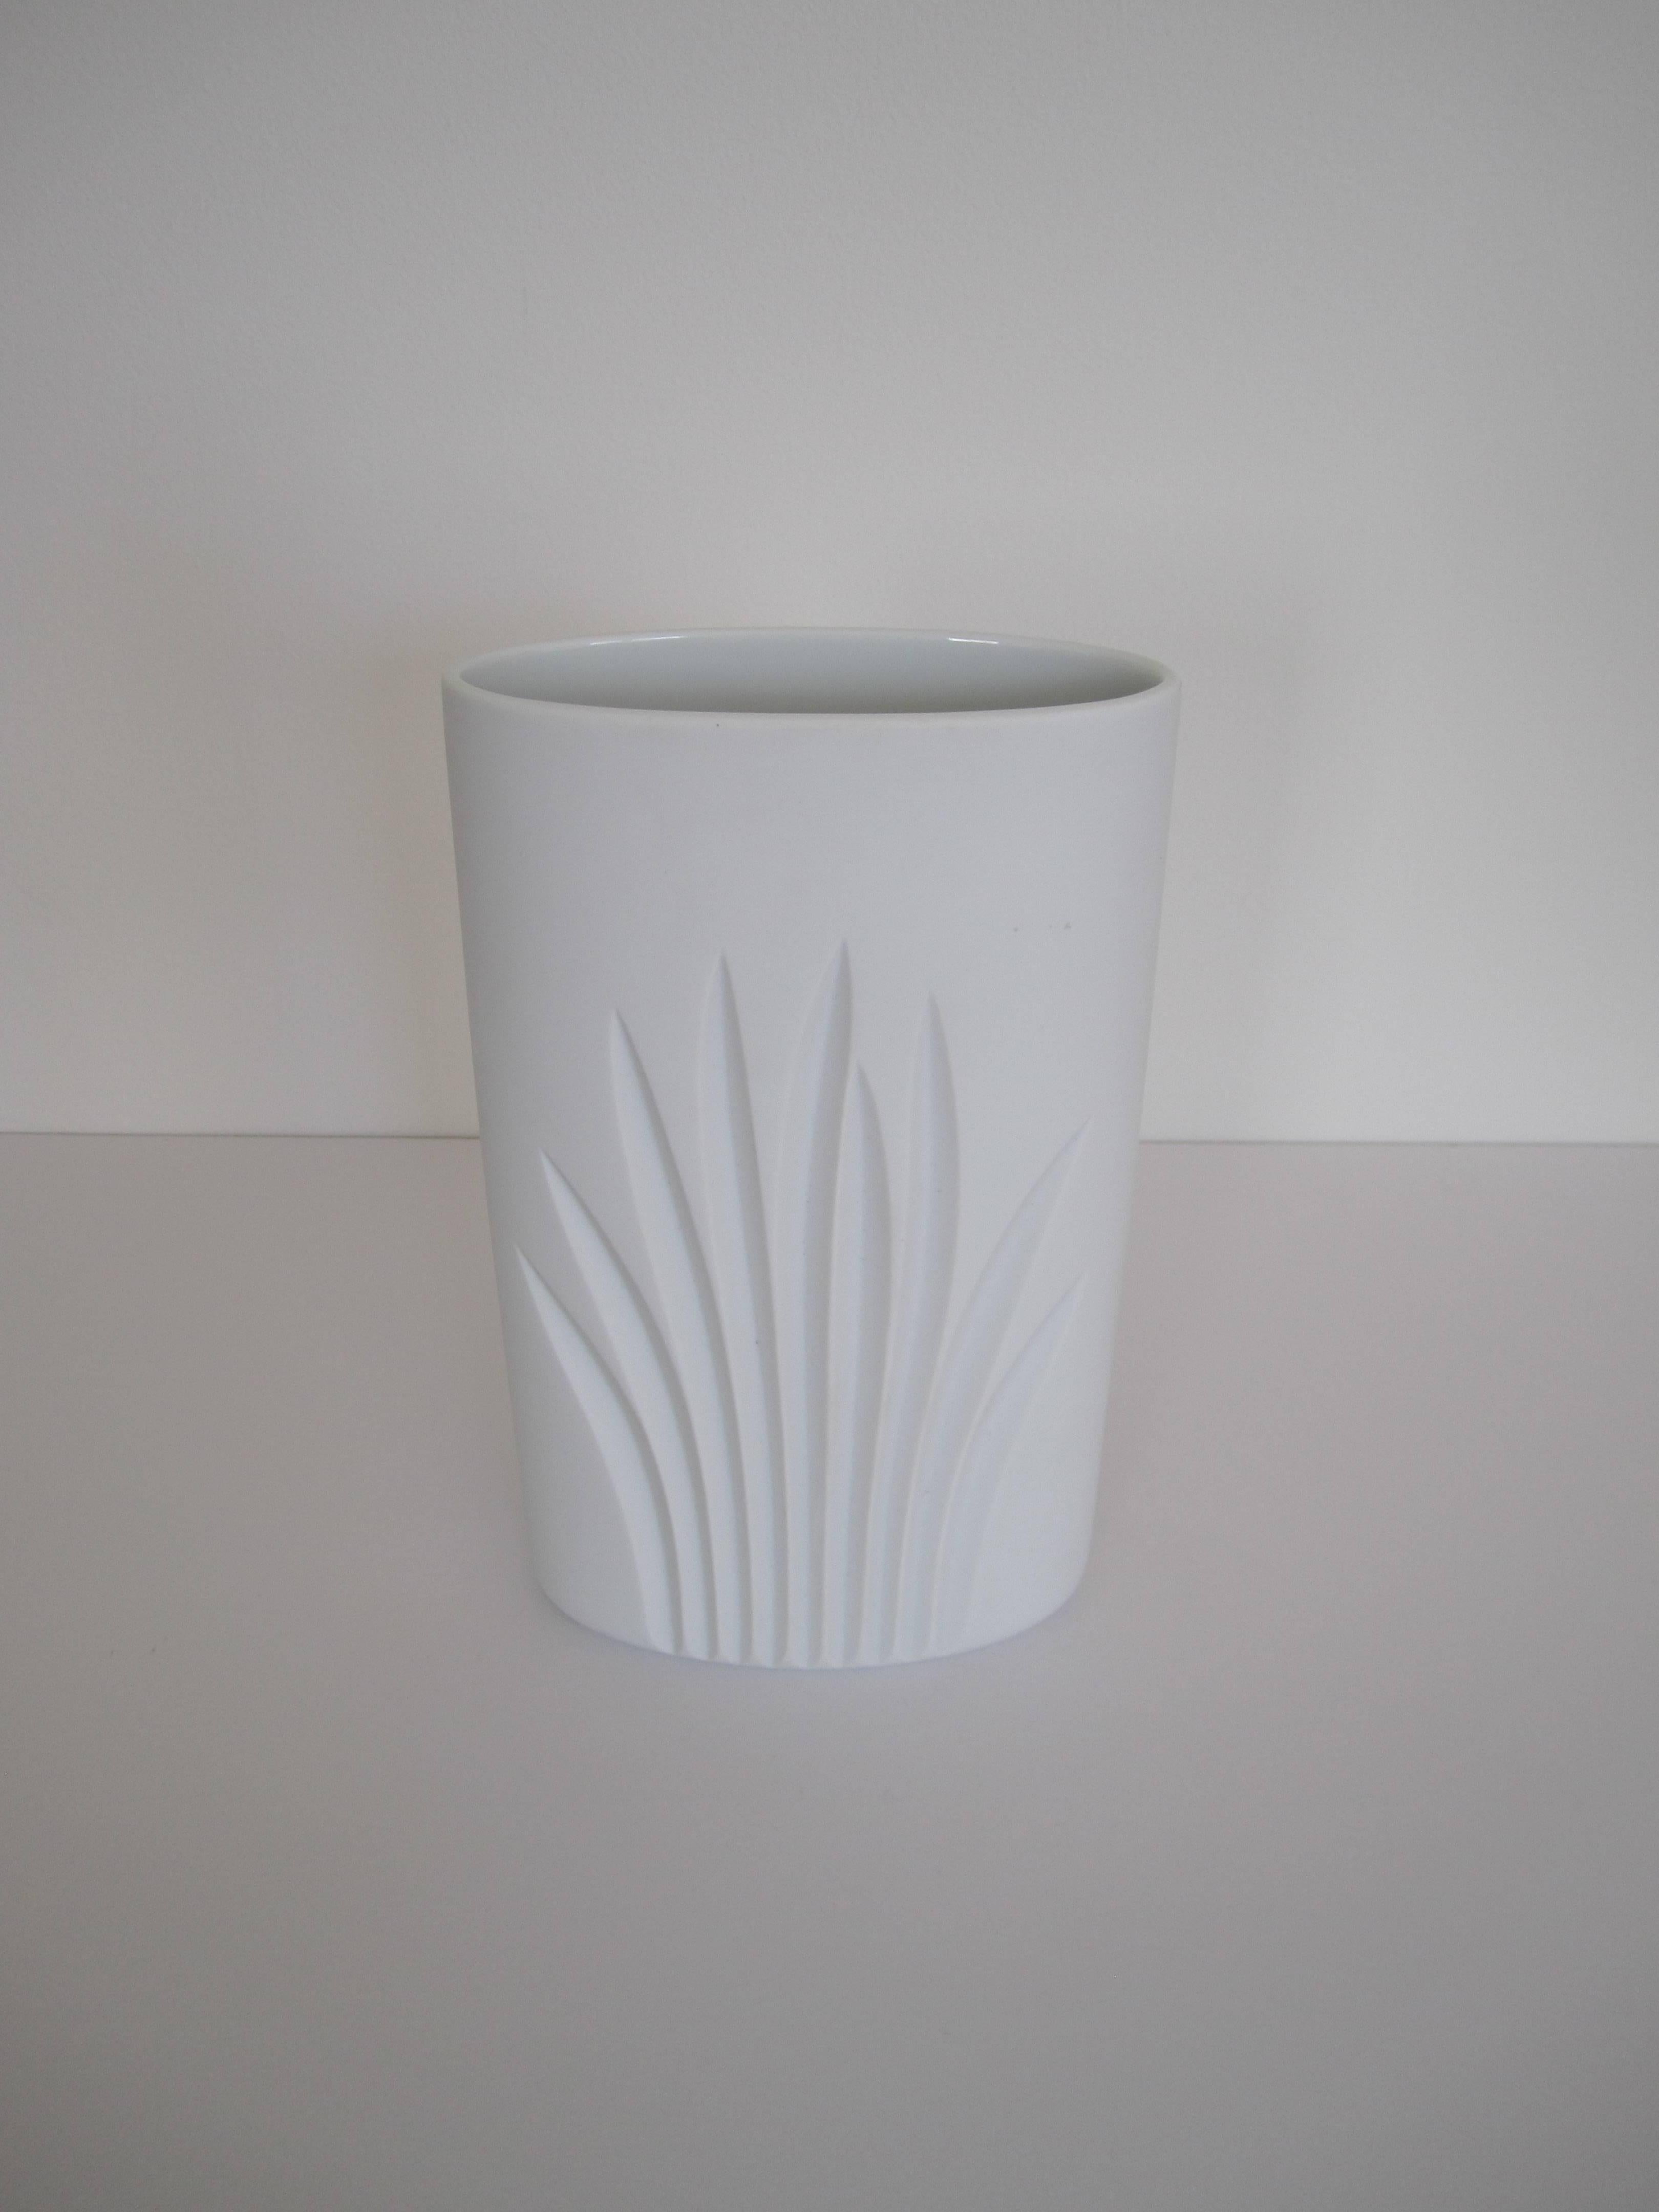 Organic Modern German White Matte Porcelain Pottery Vase by Rosenthal